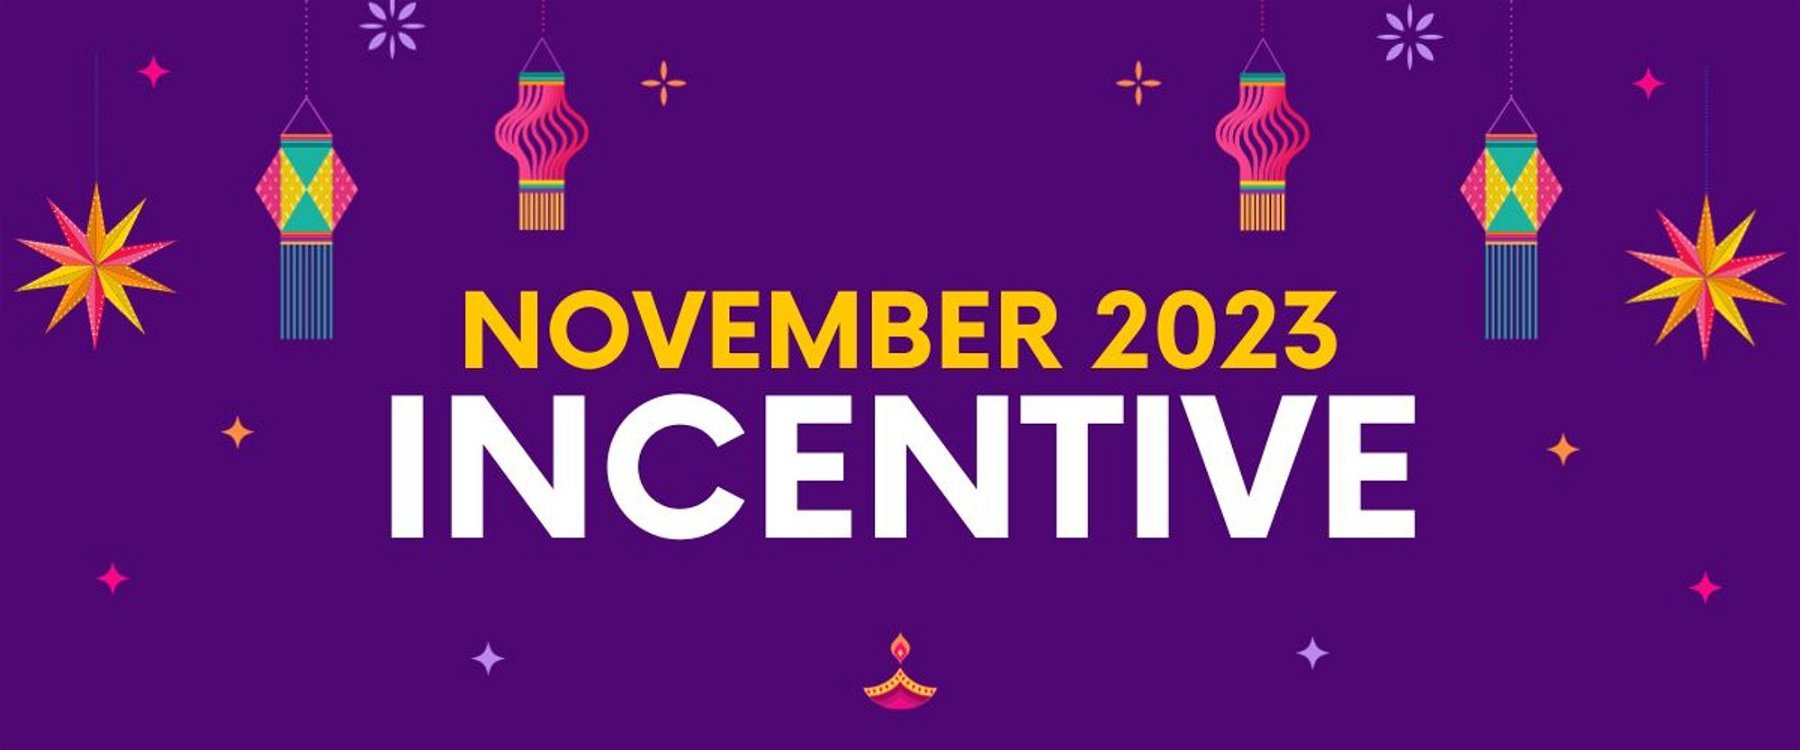 November 2023 Incentive